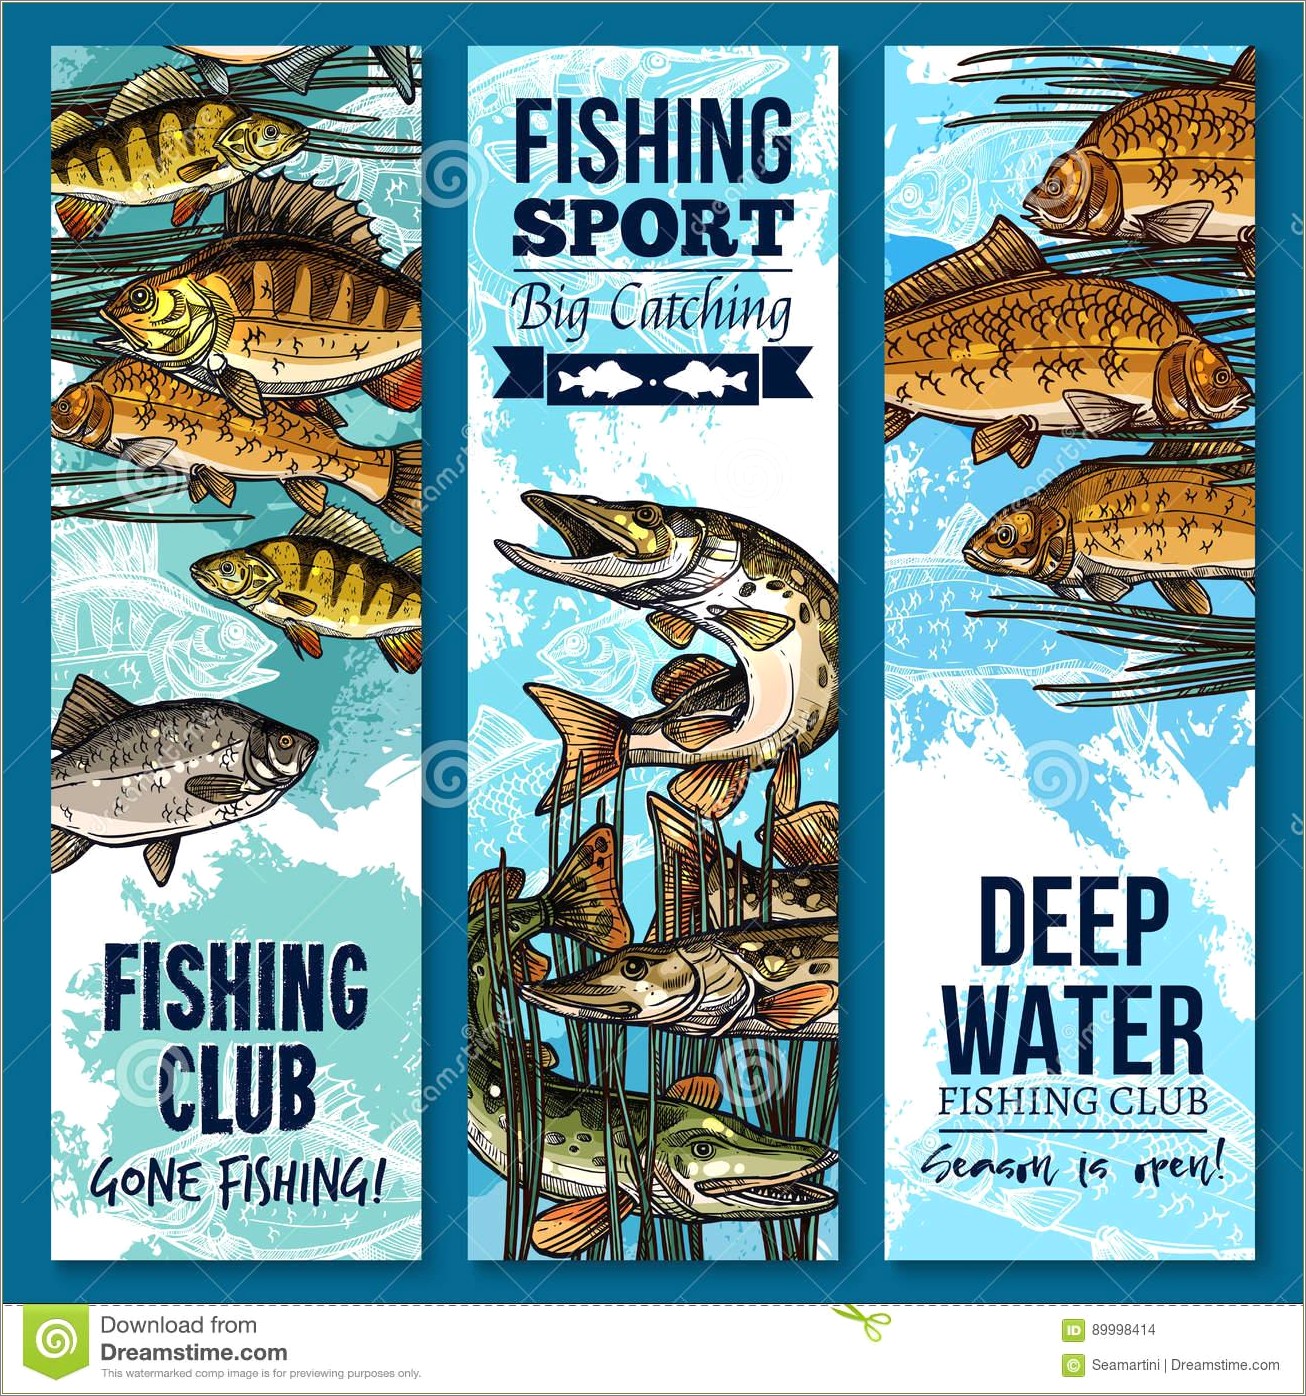 Bass Fishing Tournament Flyer Template Psd Free